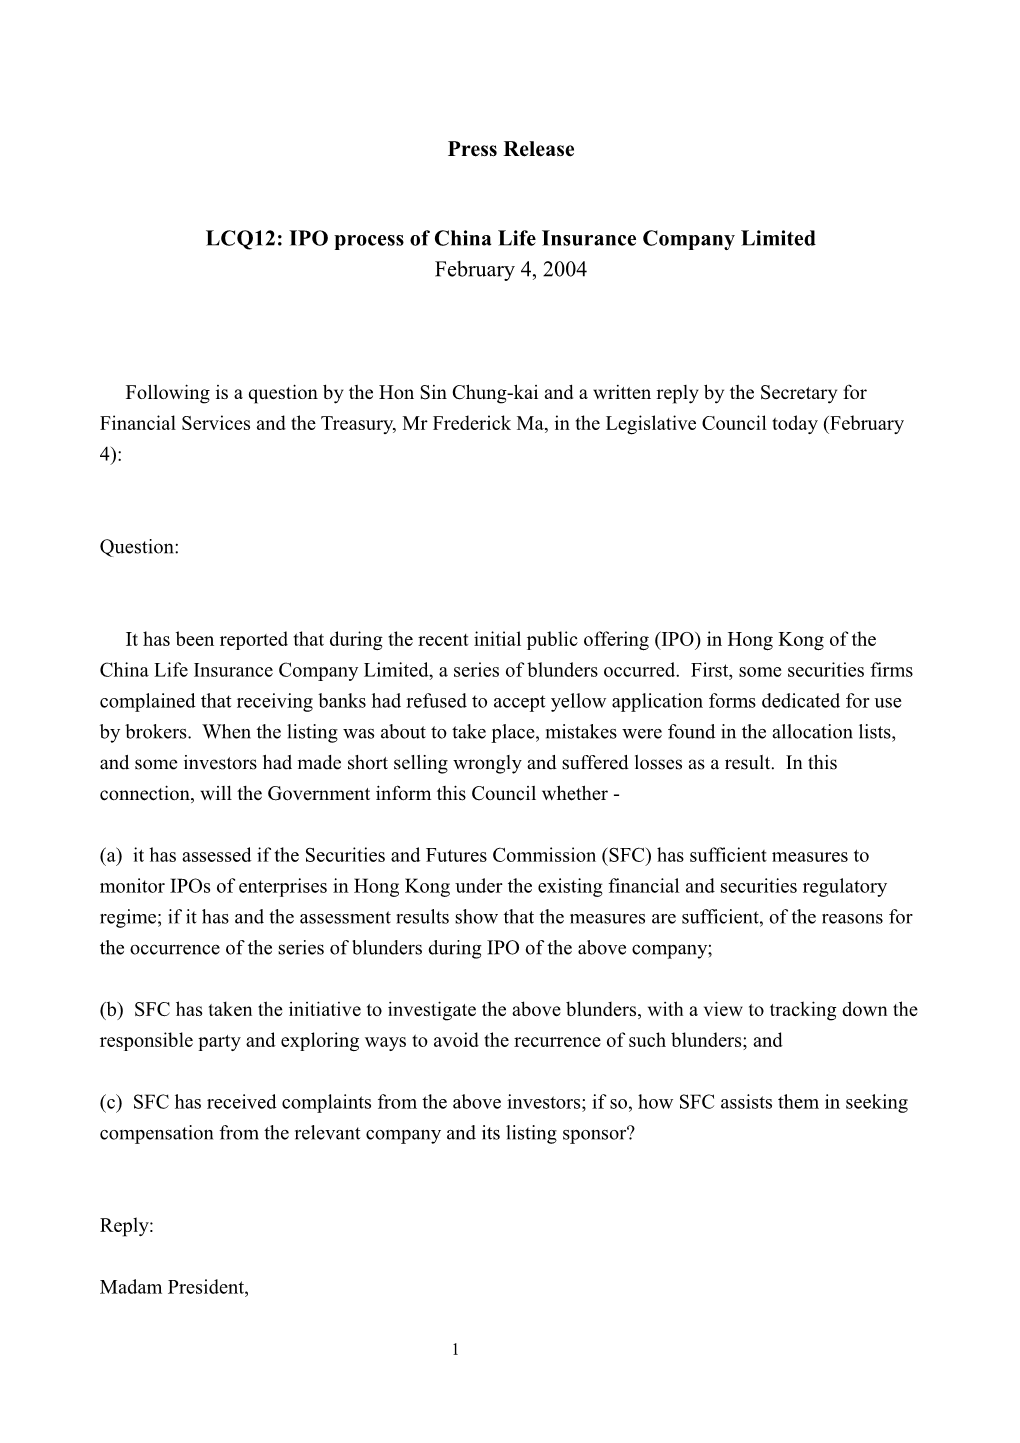 LCQ12: IPO Process of China Life Insurance Company Limited (5